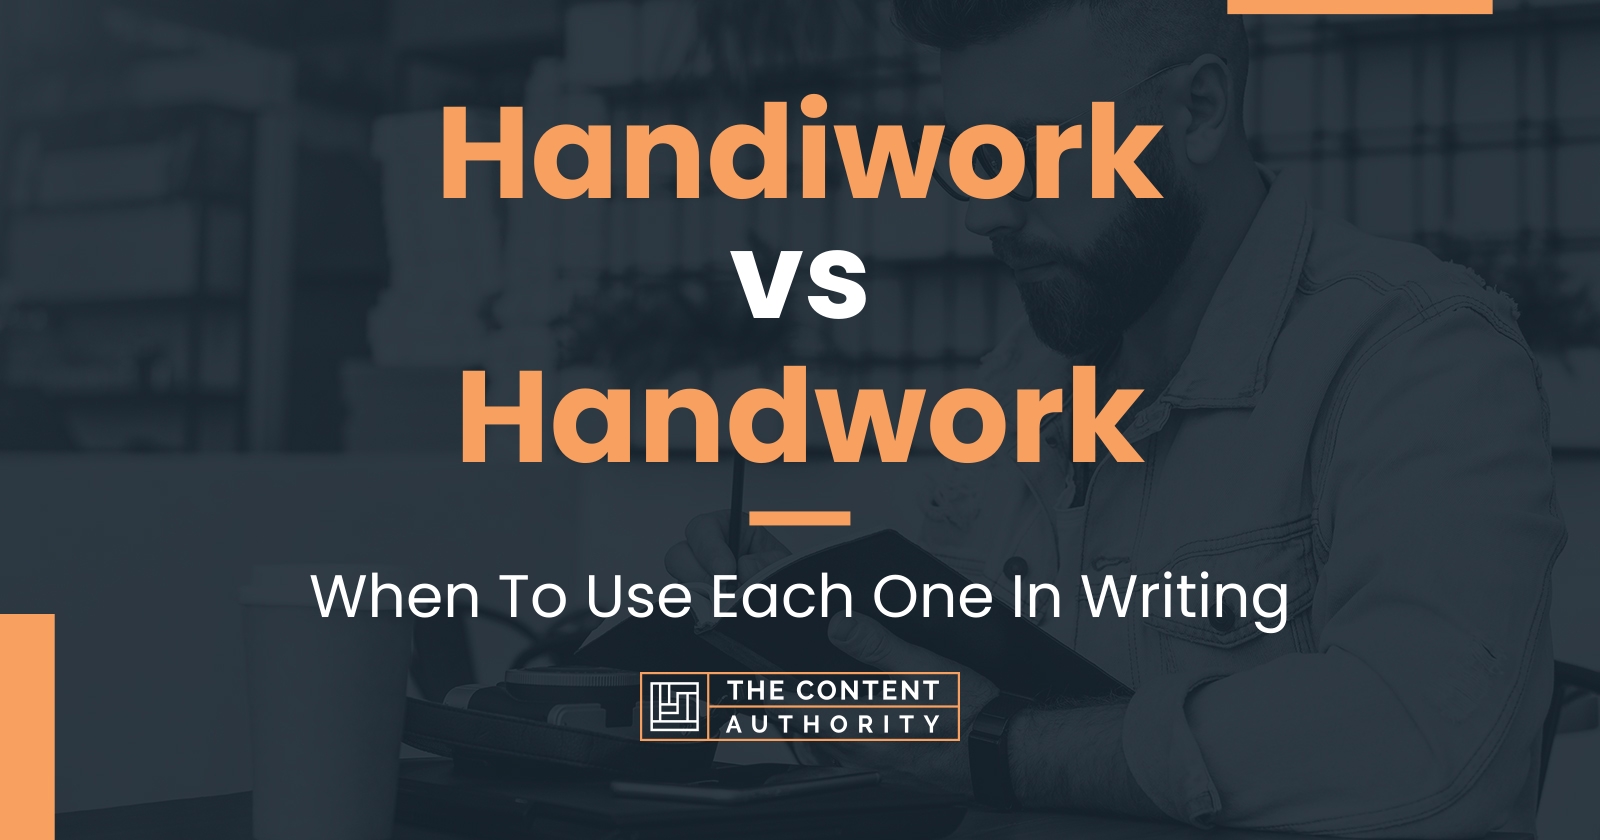 Handiwork vs Handwork: When To Use Each One In Writing